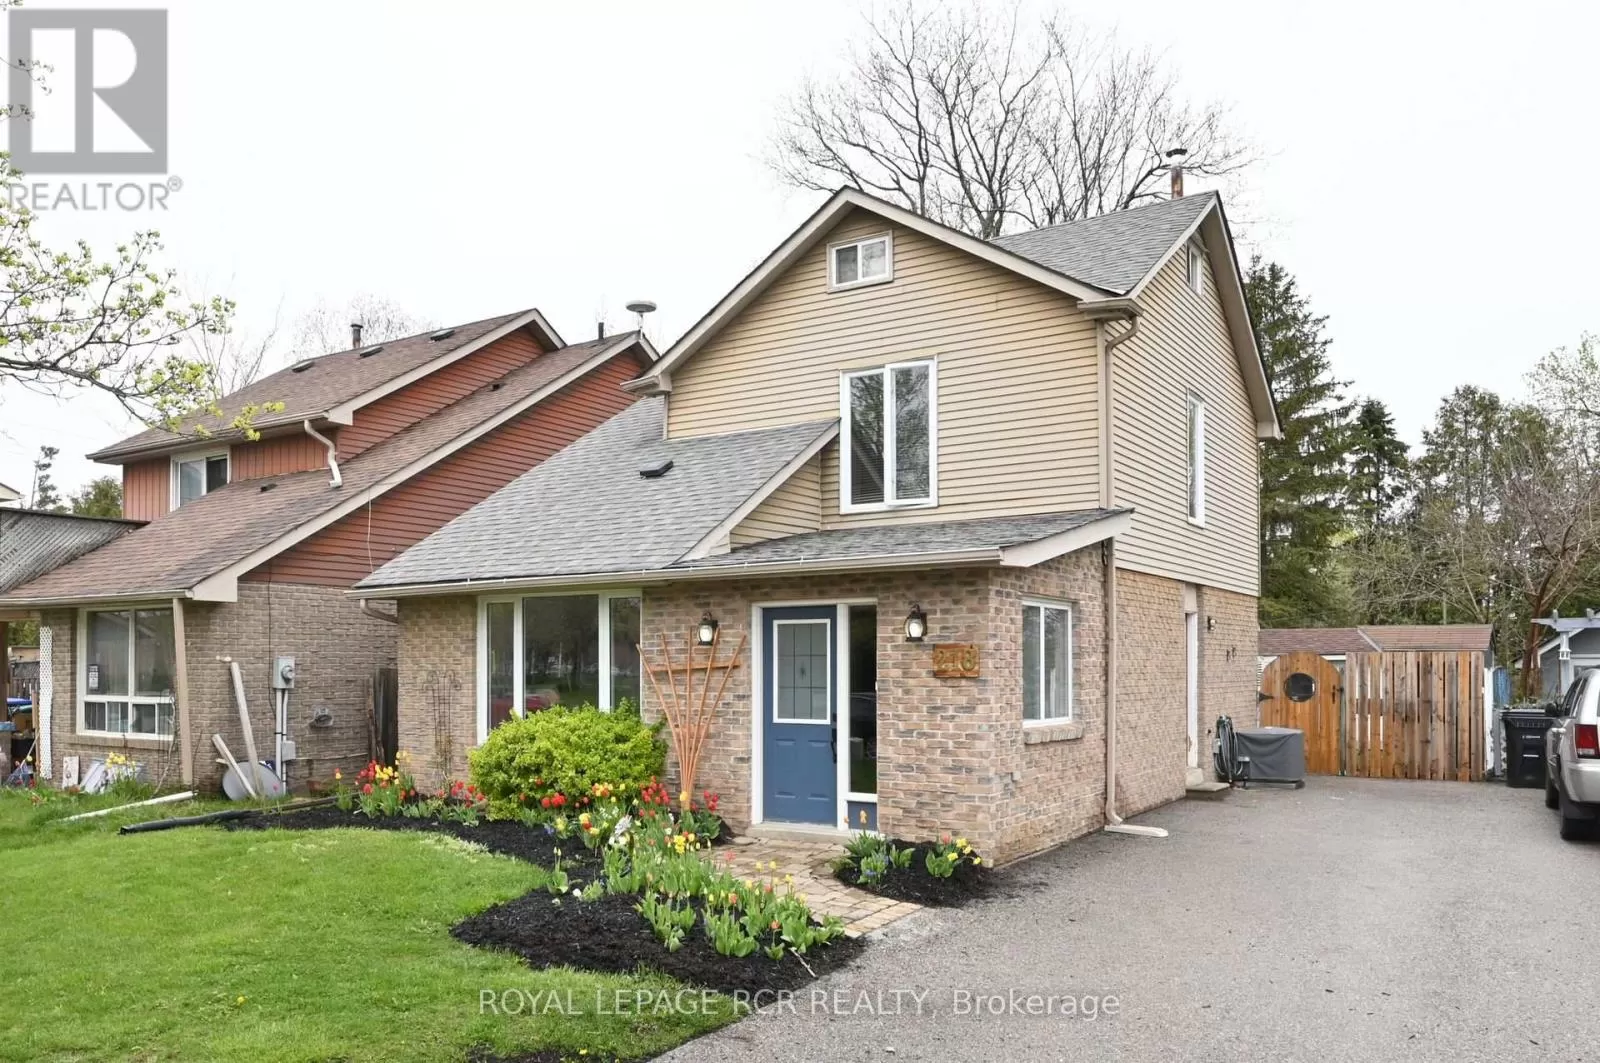 House for rent: 218 Beattie Avenue, New Tecumseth, Ontario L9R 1B9